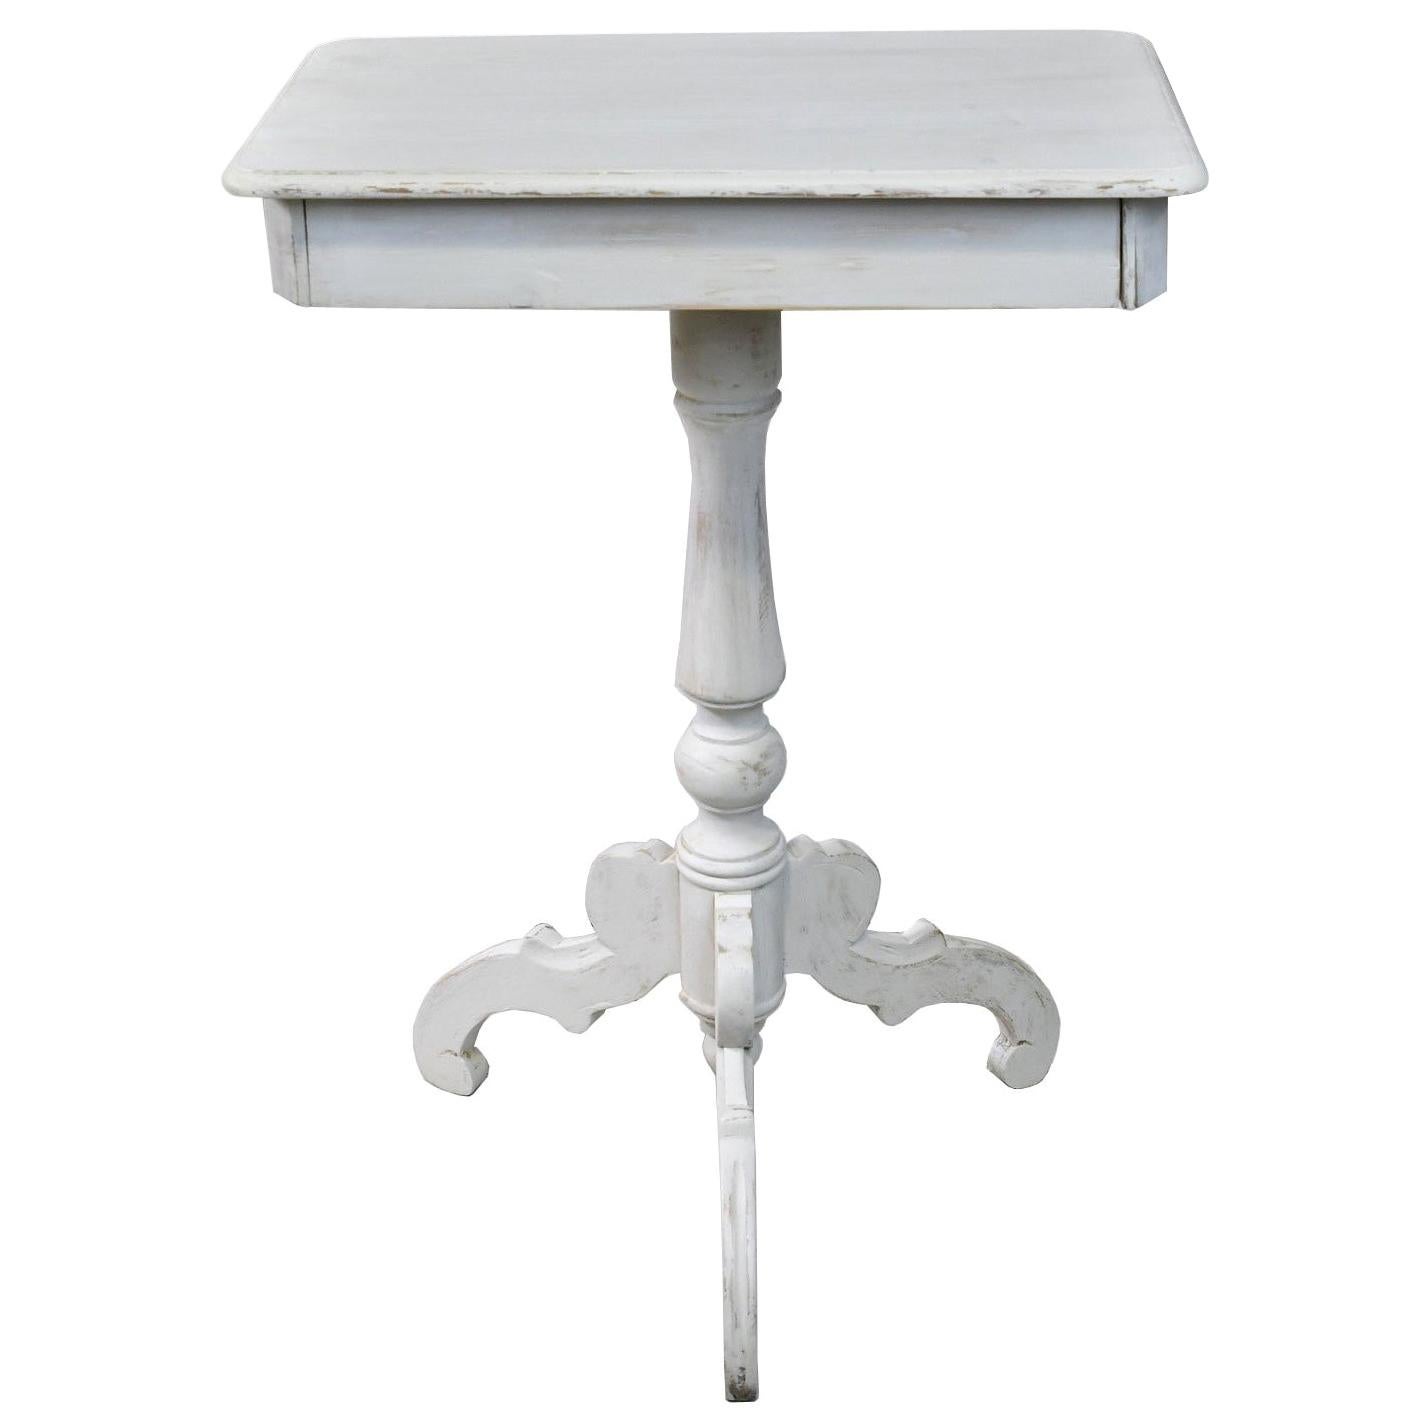 Swedish Gustavian End Table on Tri-foot Pedestal w/ Grey/White Paint, c. 1825